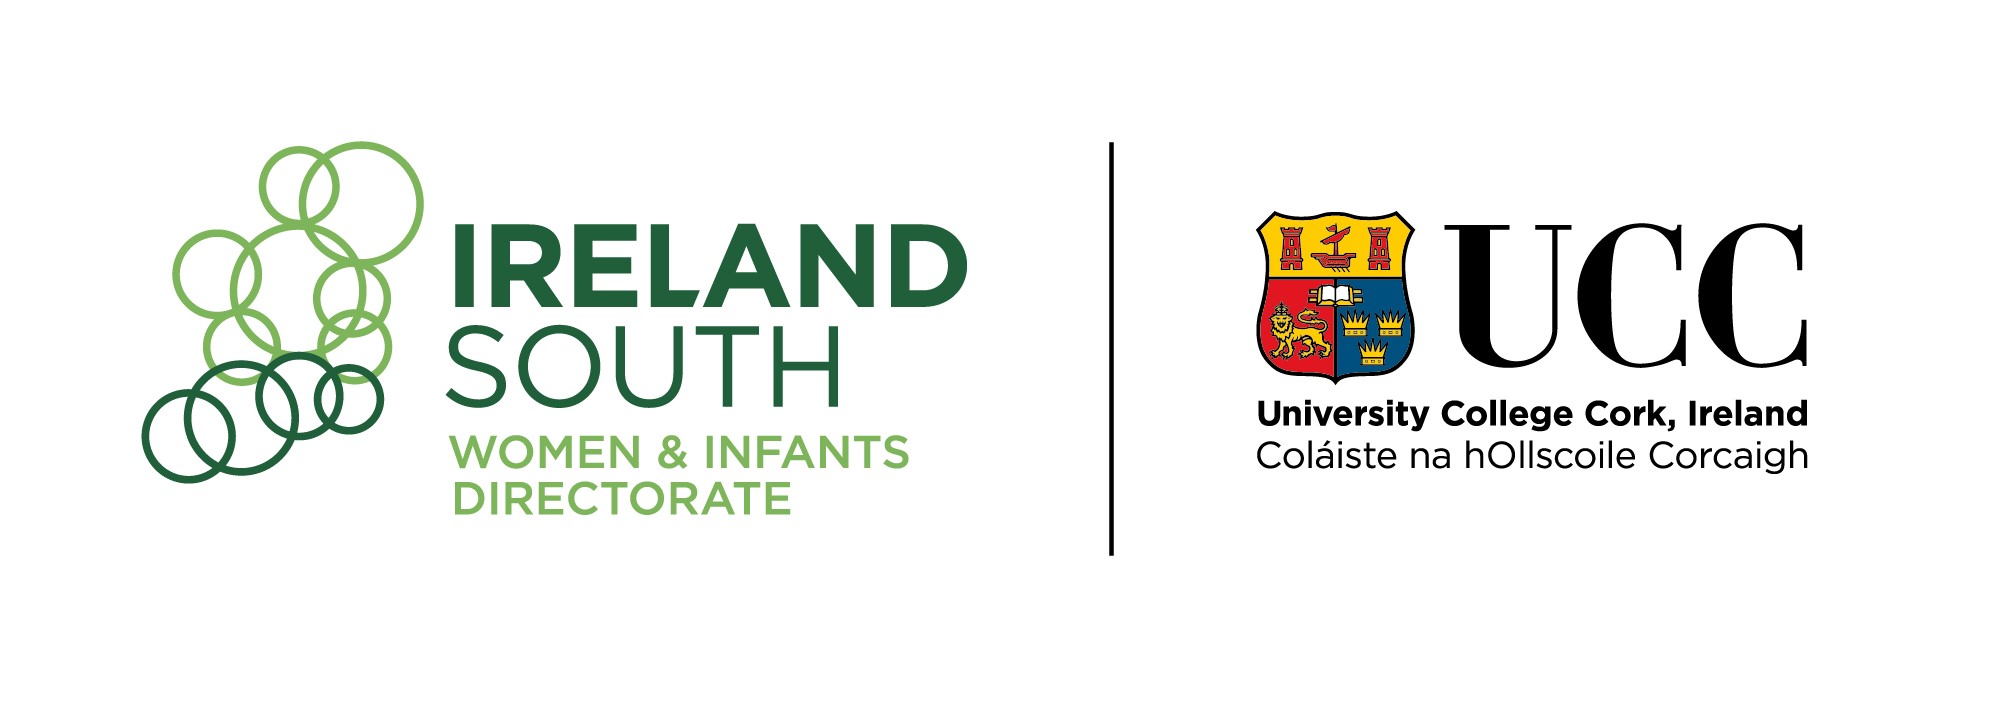 Ireland-South-logo-jpg